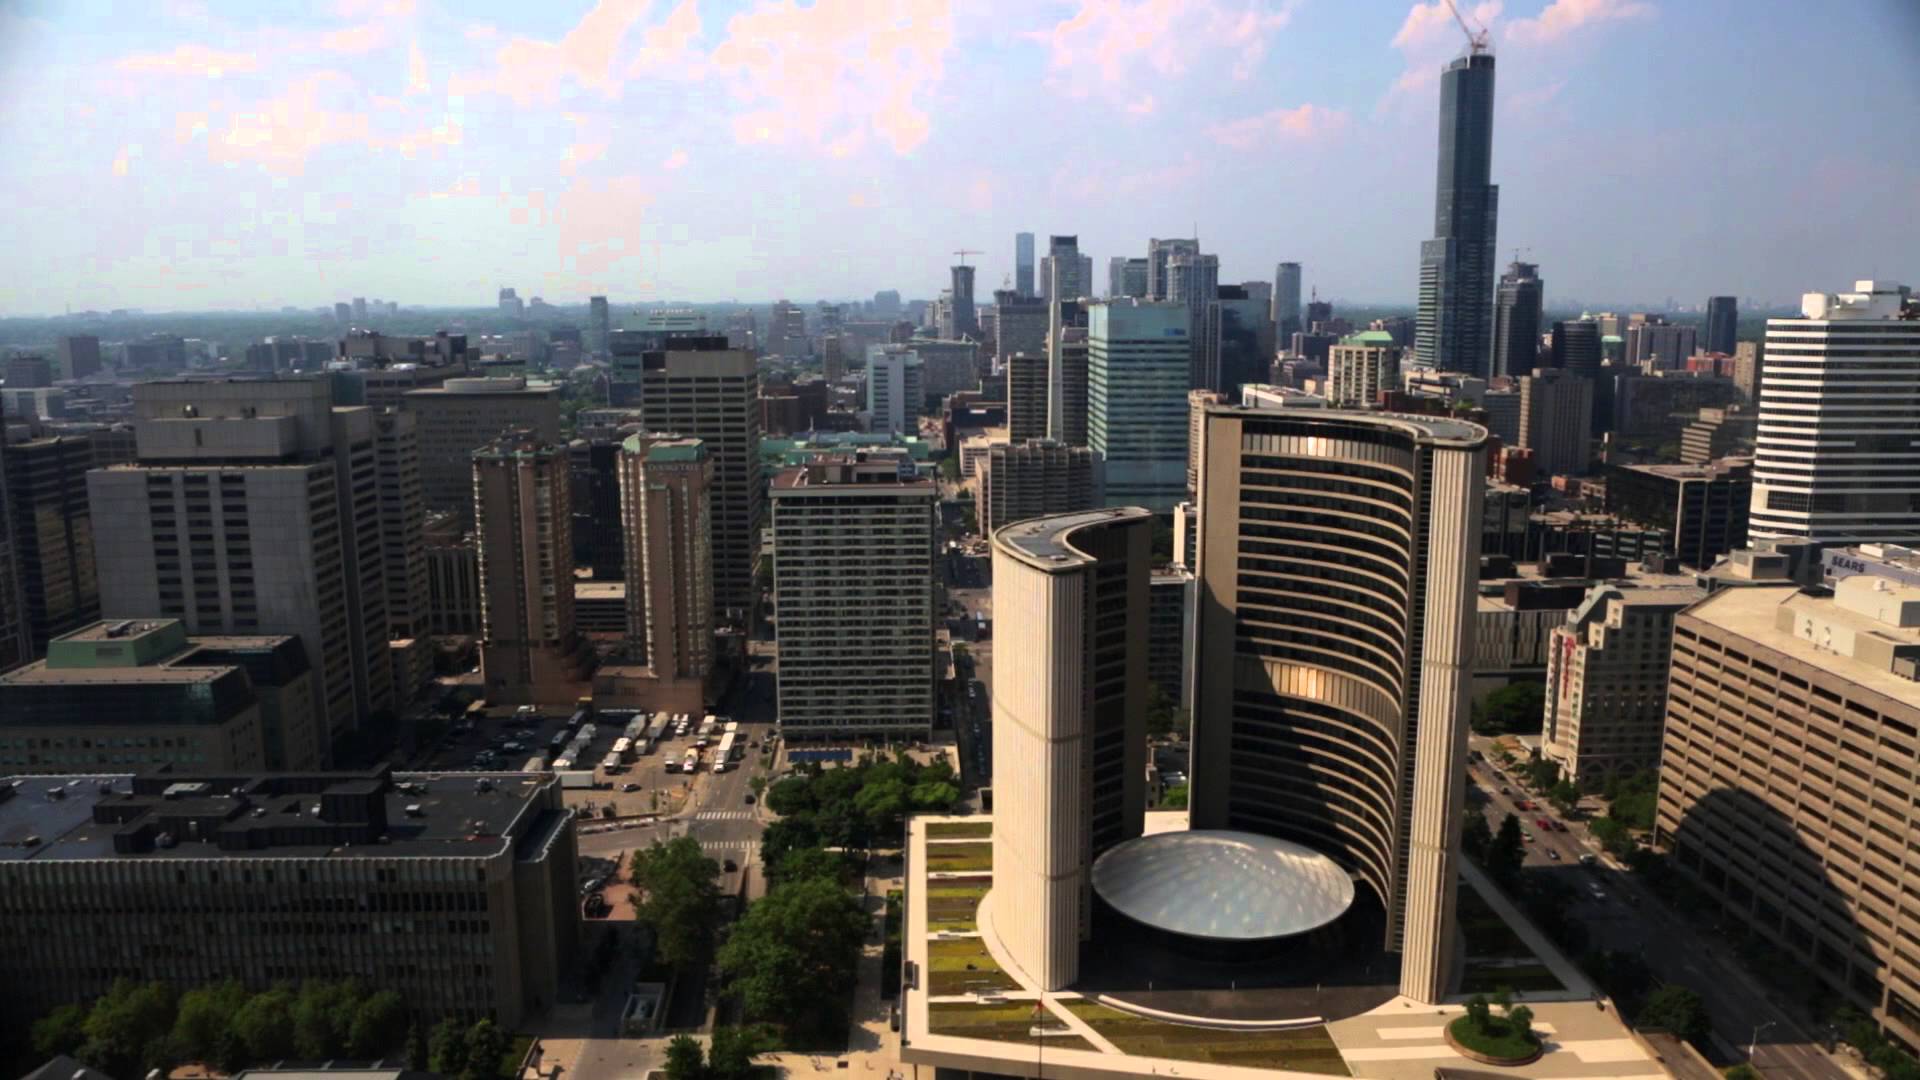 The Building - Toronto City Hall - YouTube